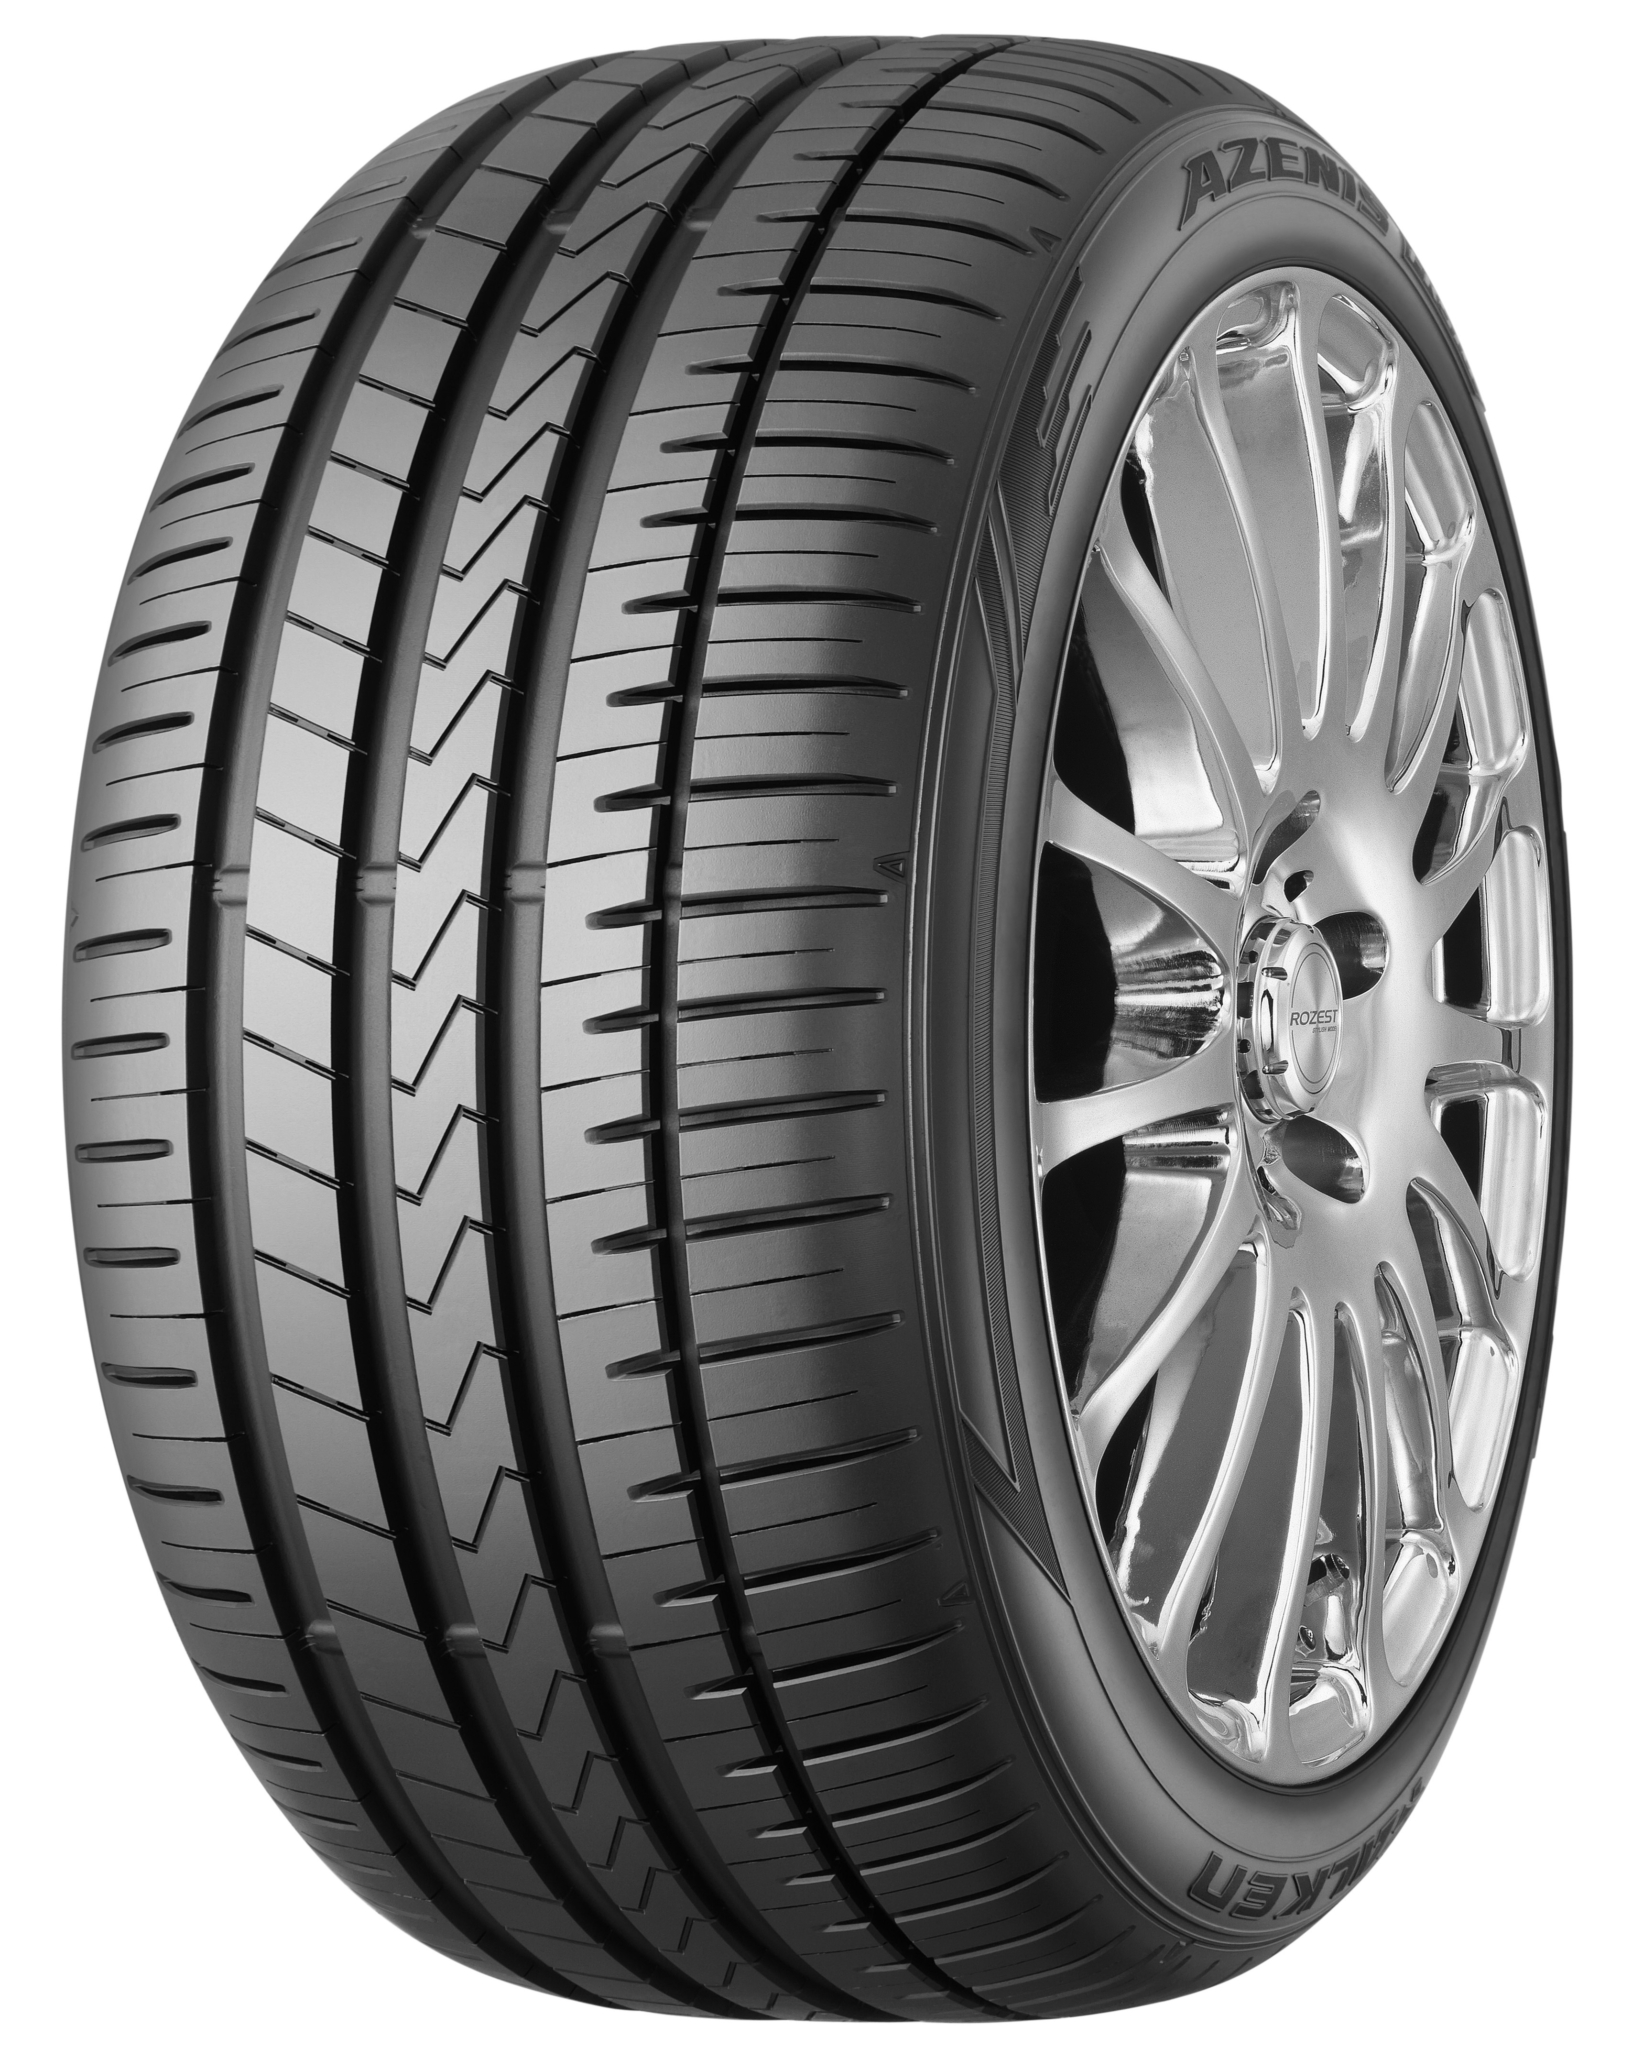 Falken expands UHP, all-season, all-terrain tyre ranges